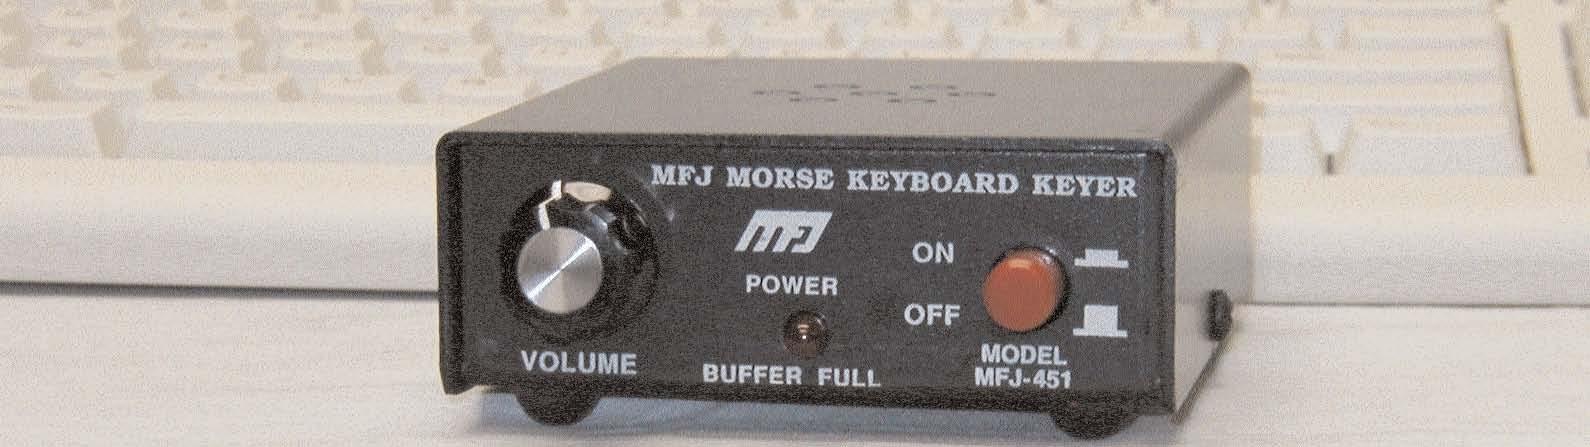 MFJ-451 CW Keyboard Keyer